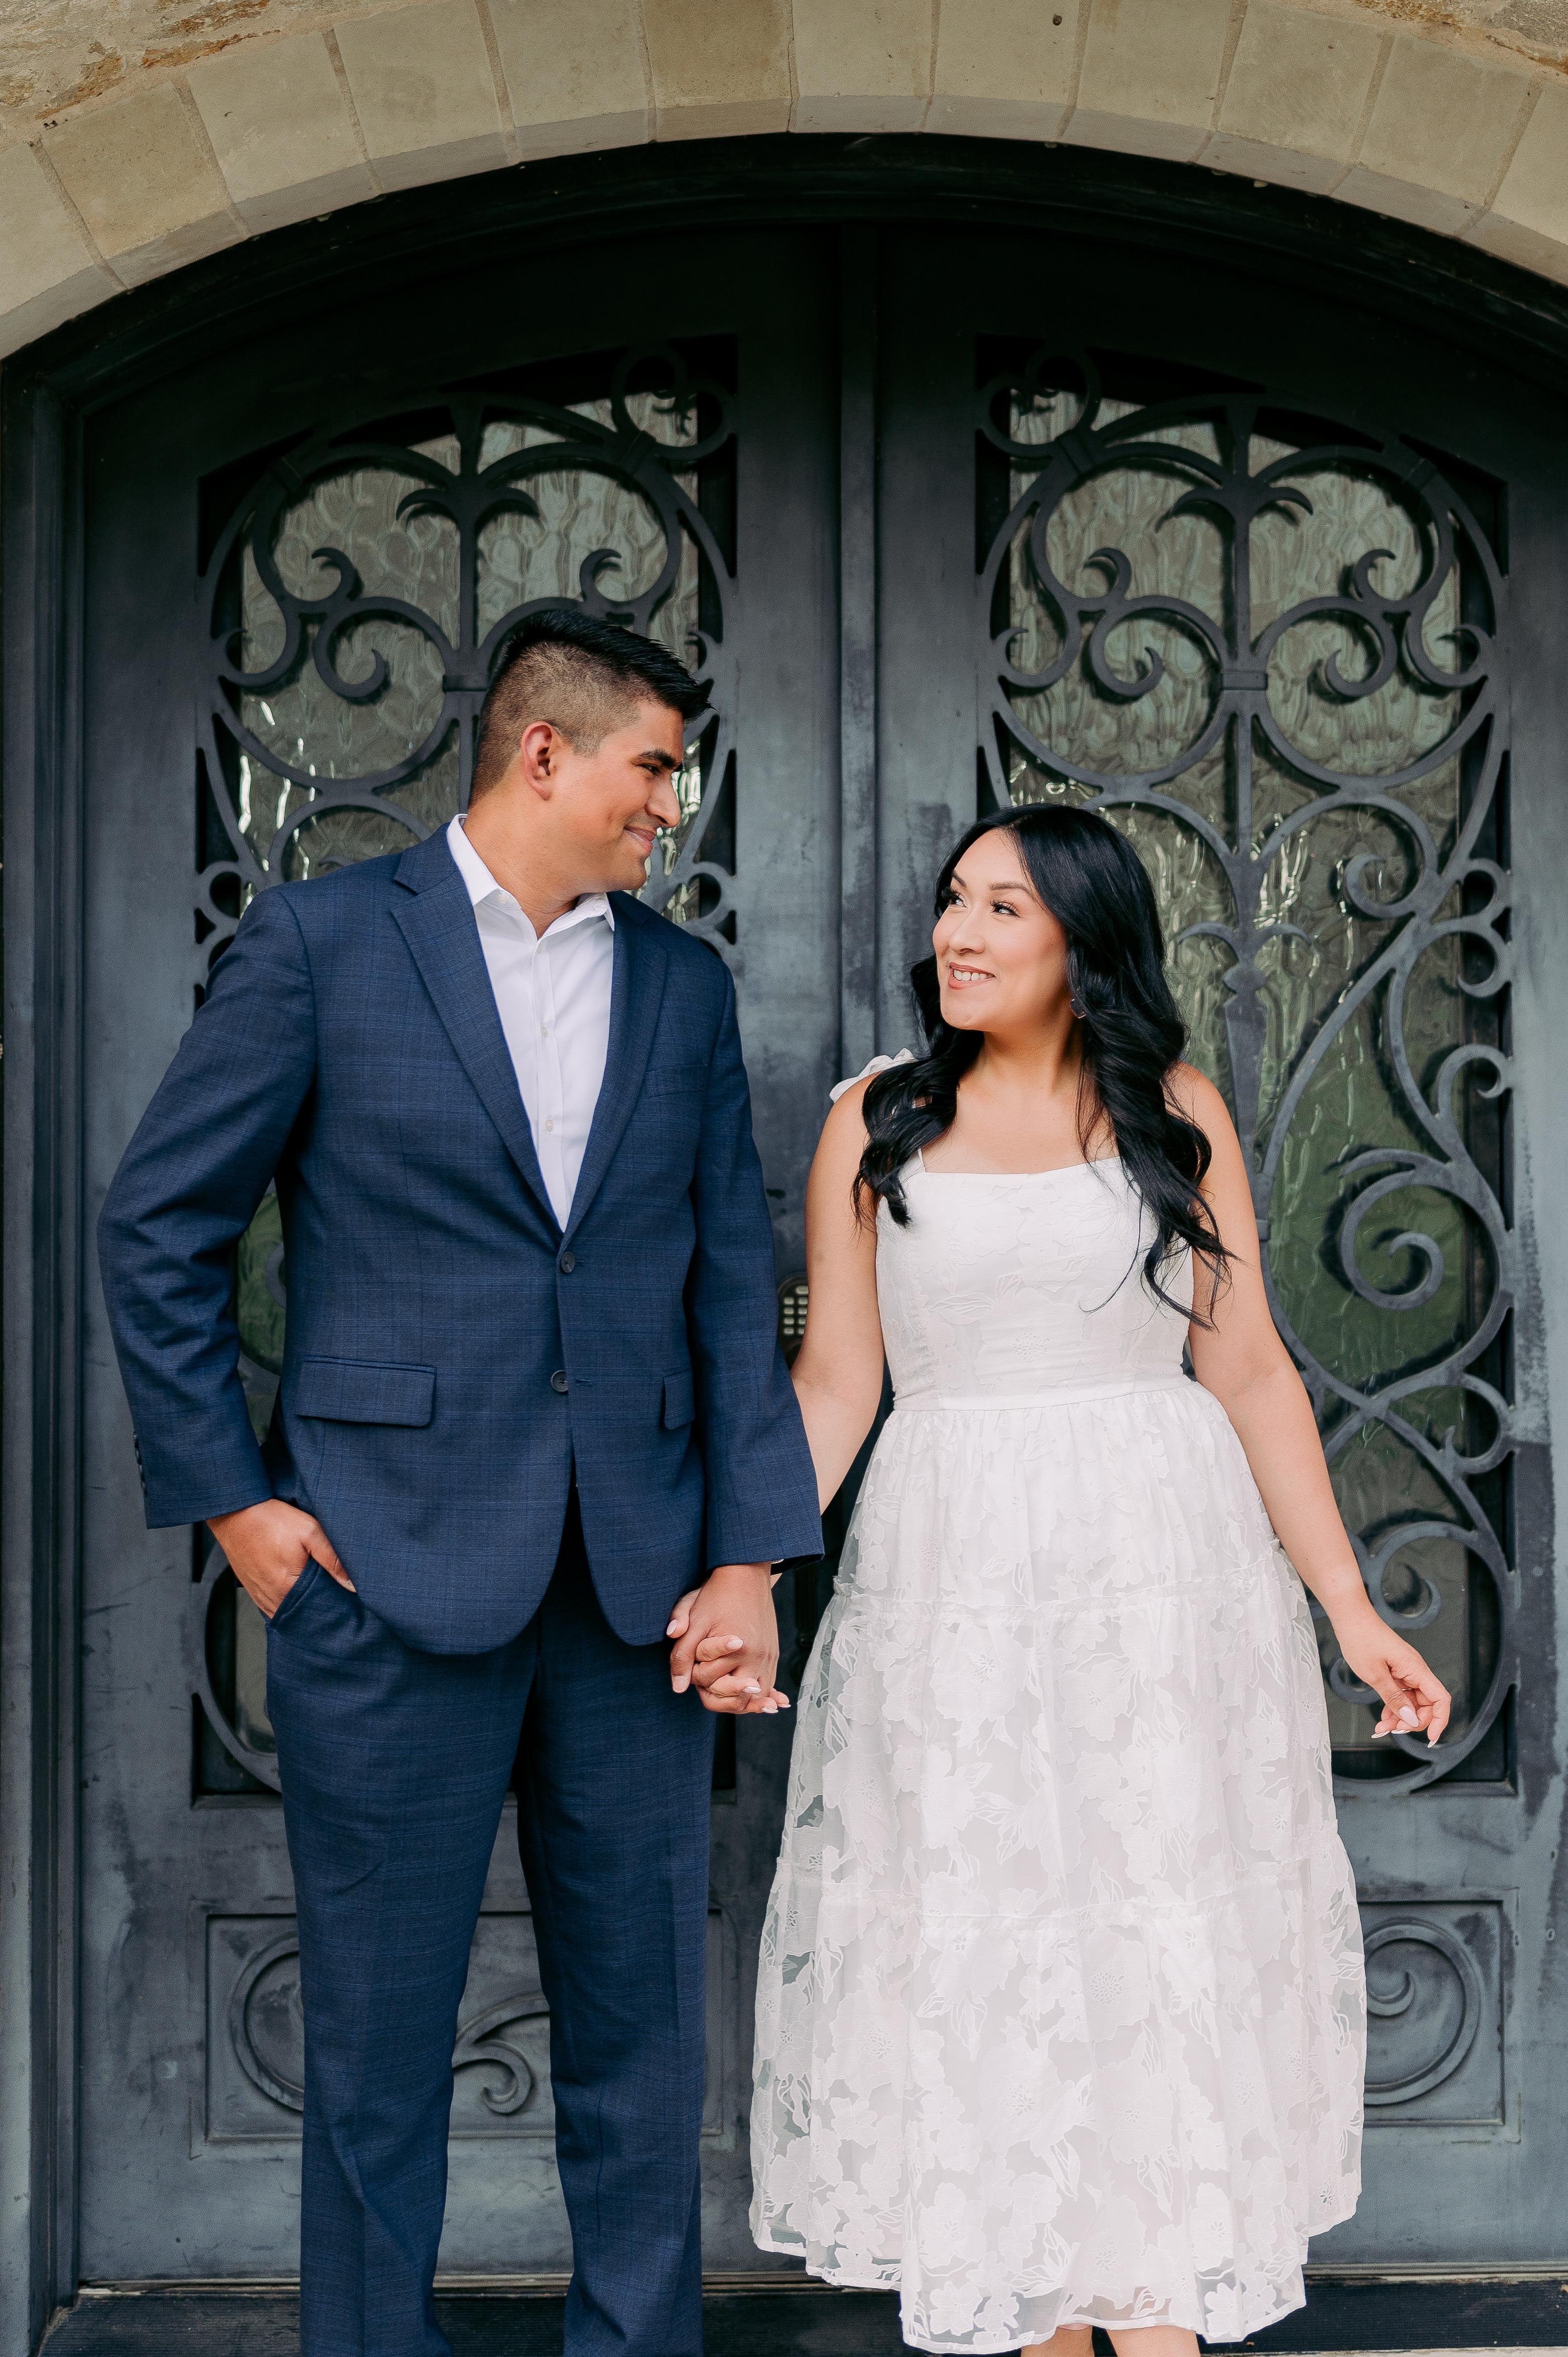 The Wedding Website of April Munoz and Abraham Escobedo